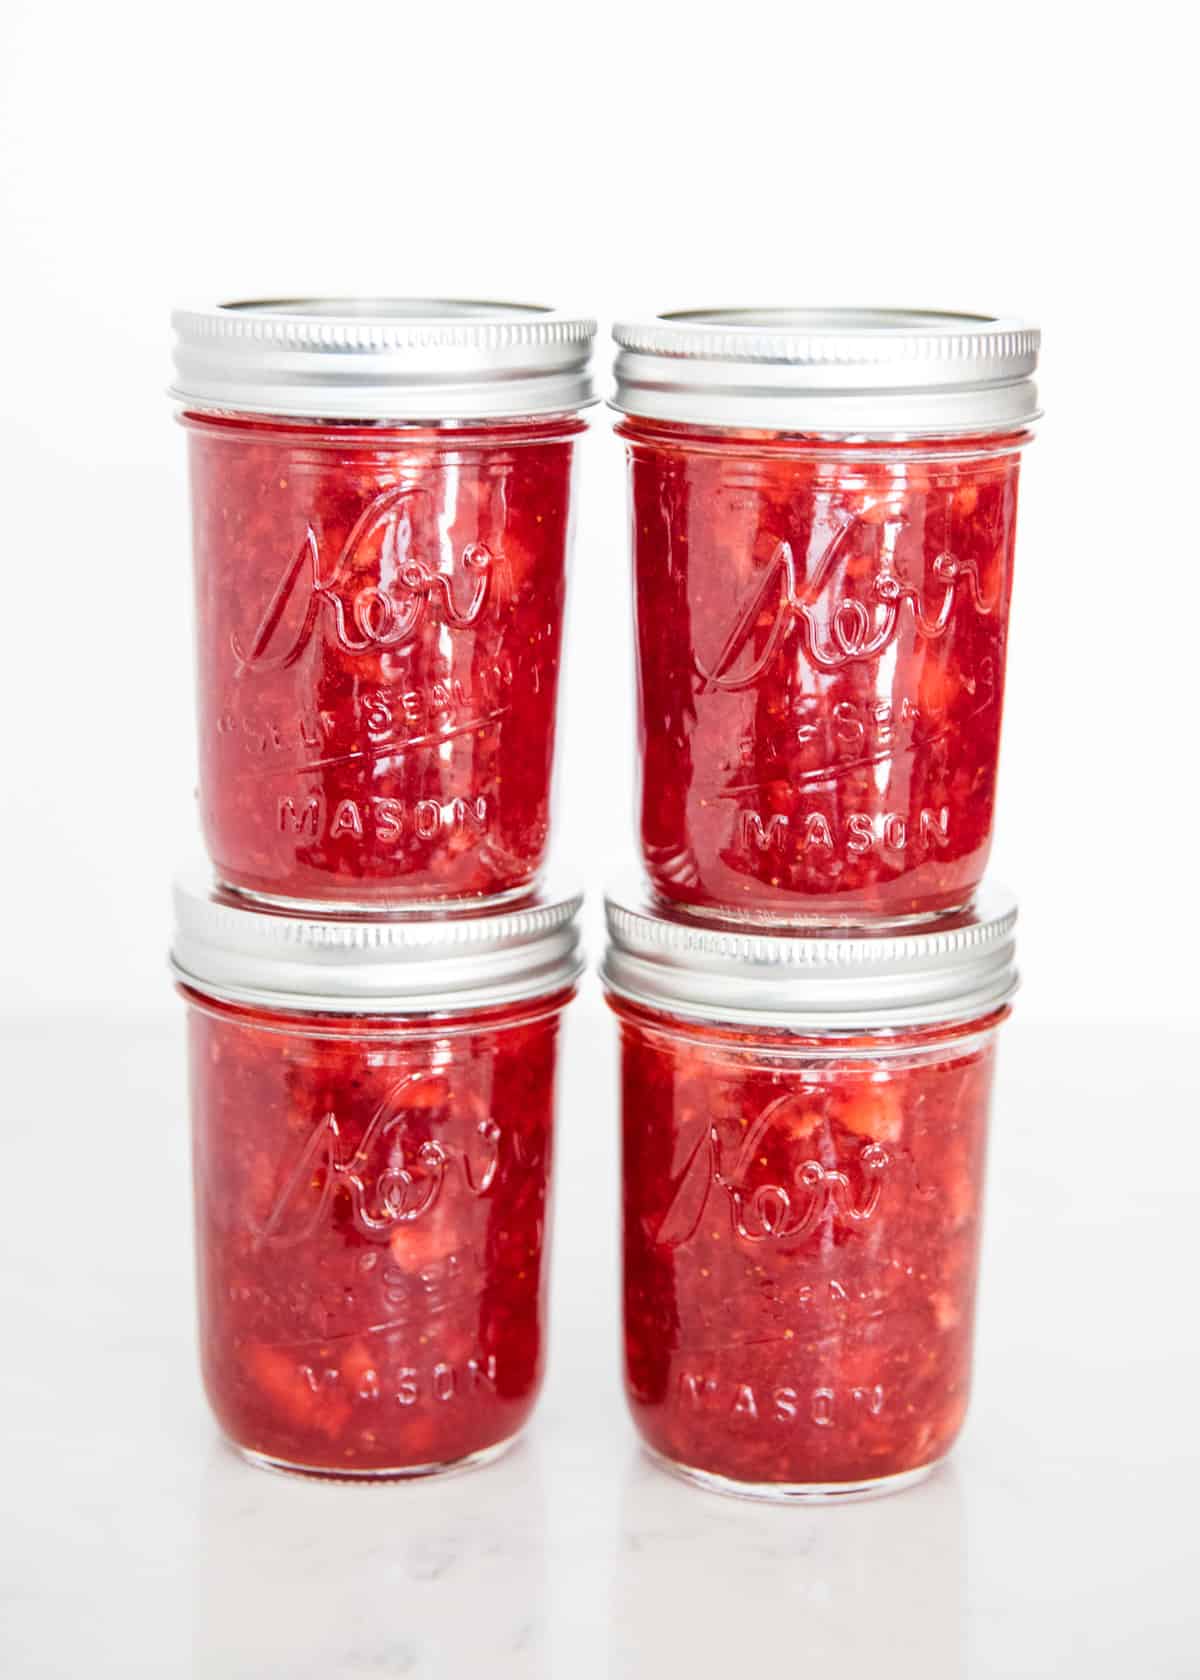 Stacked jars of strawberry jam.